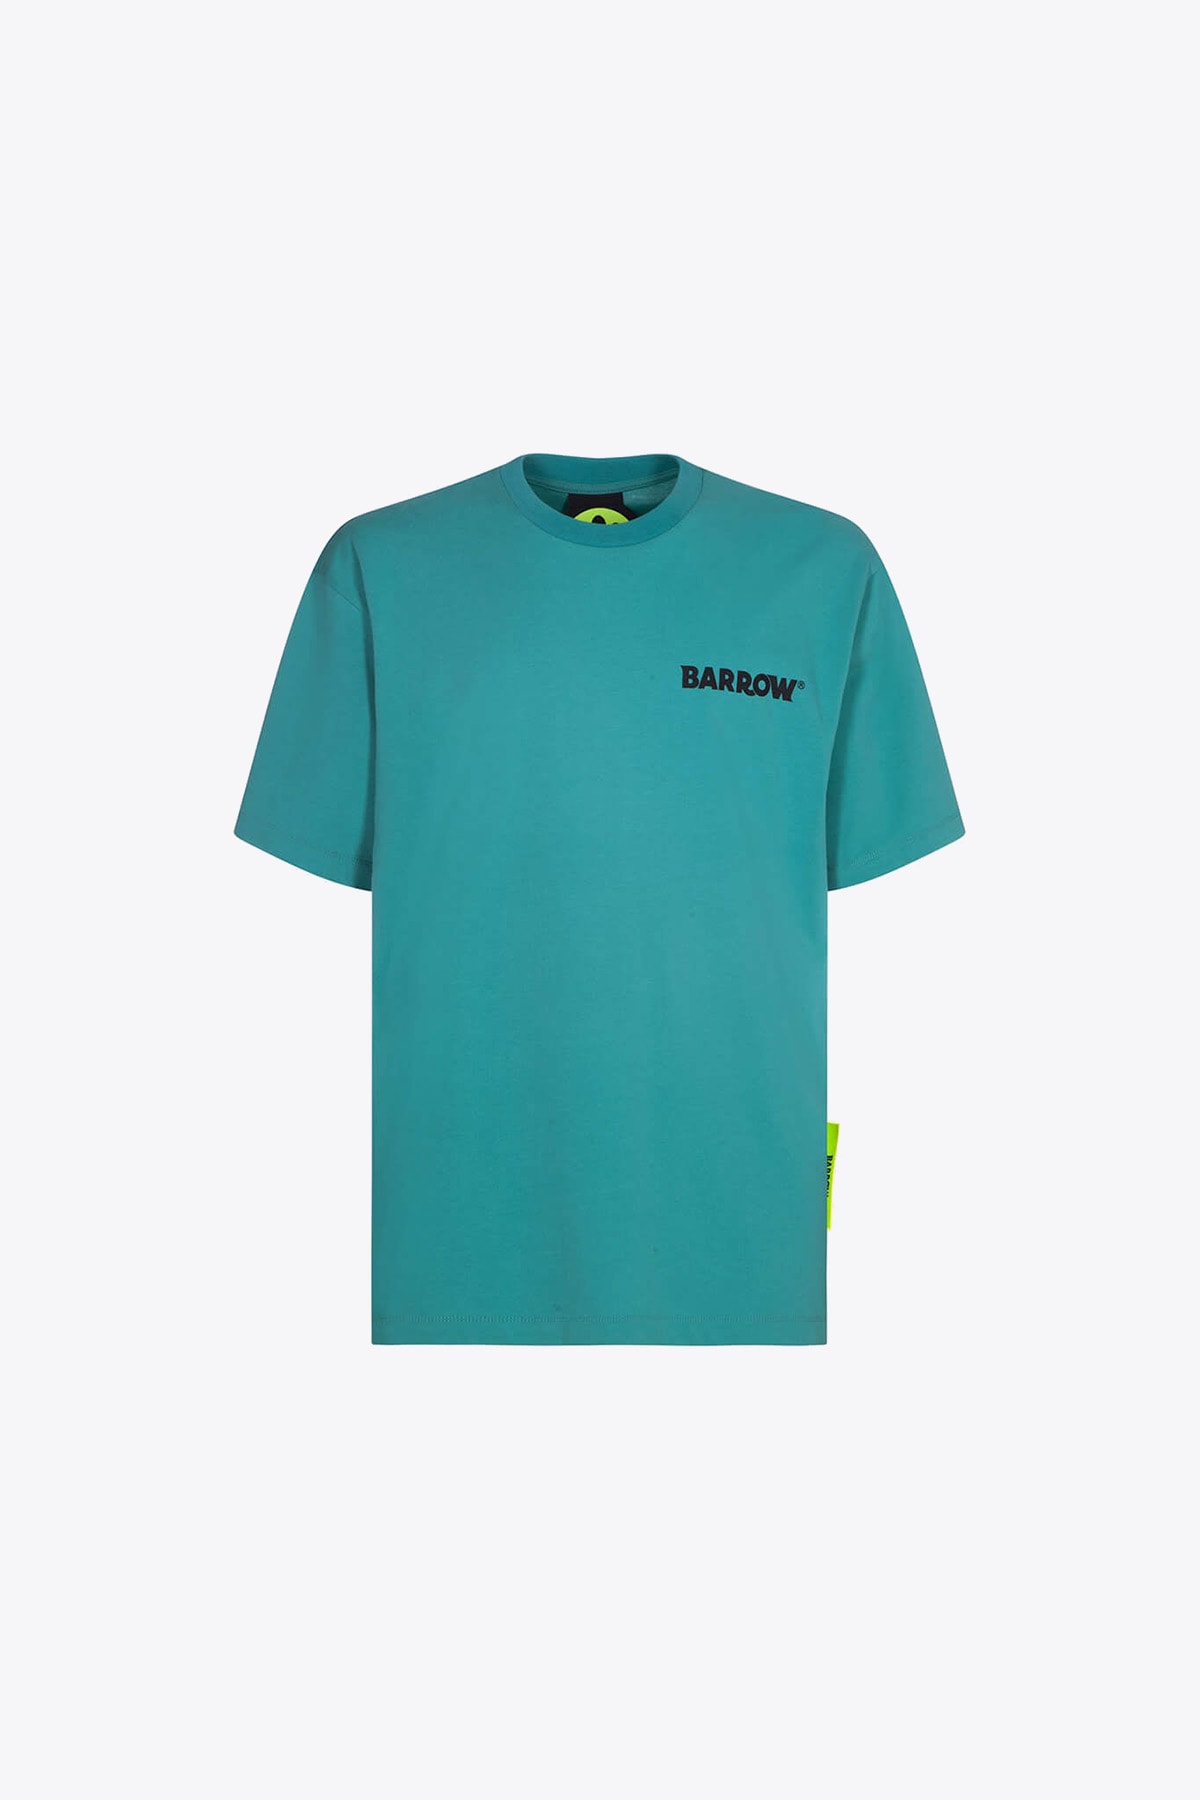 Barrow T-shirt Jersey Unisex Emerald green cotton t-shirt with back print